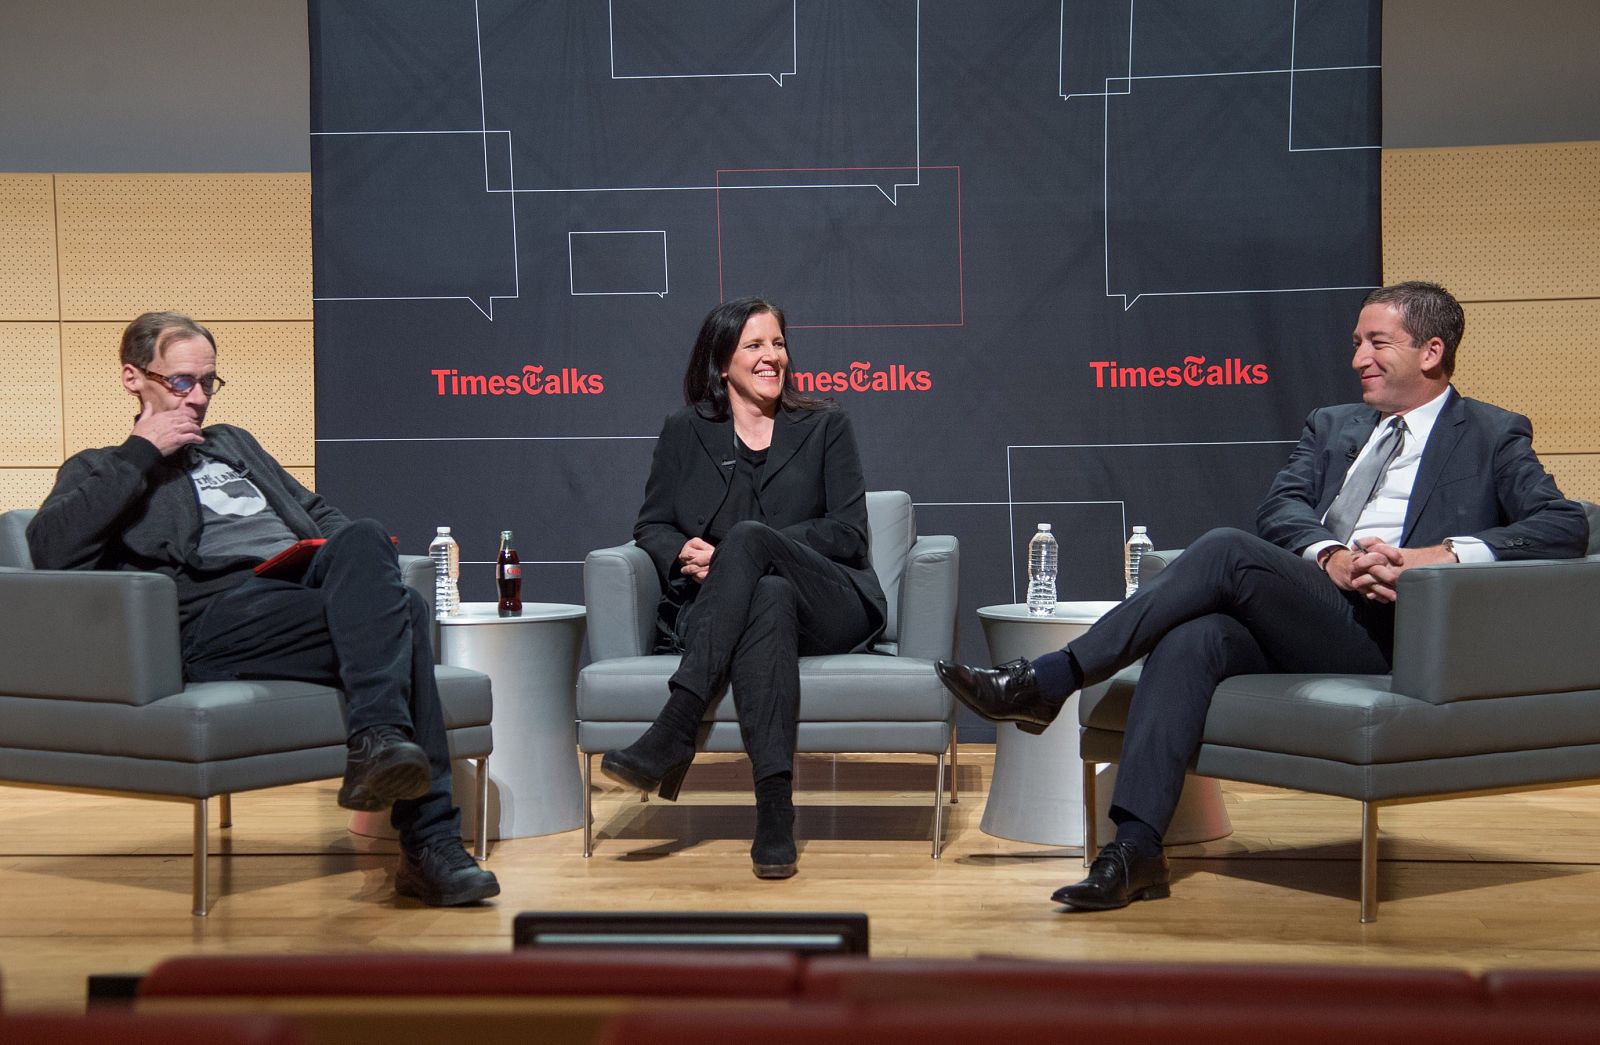 TimesTalks Presents: A Conversation With Edward Snowden, Laura Poitras and Glenn Greenwald